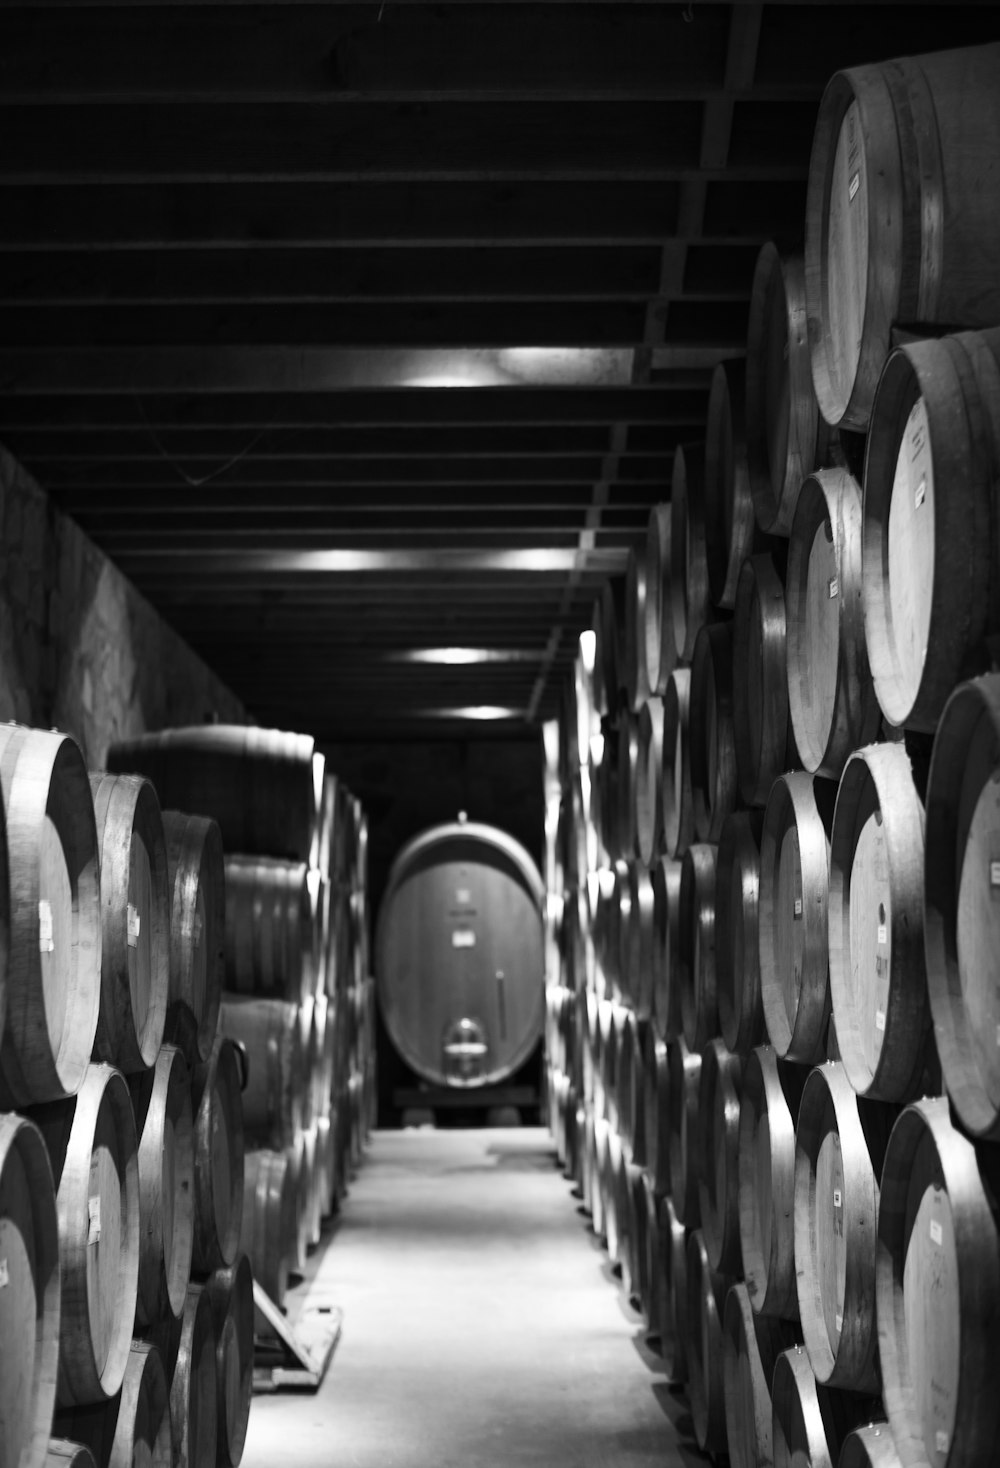 a long row of wine barrels in a cellar